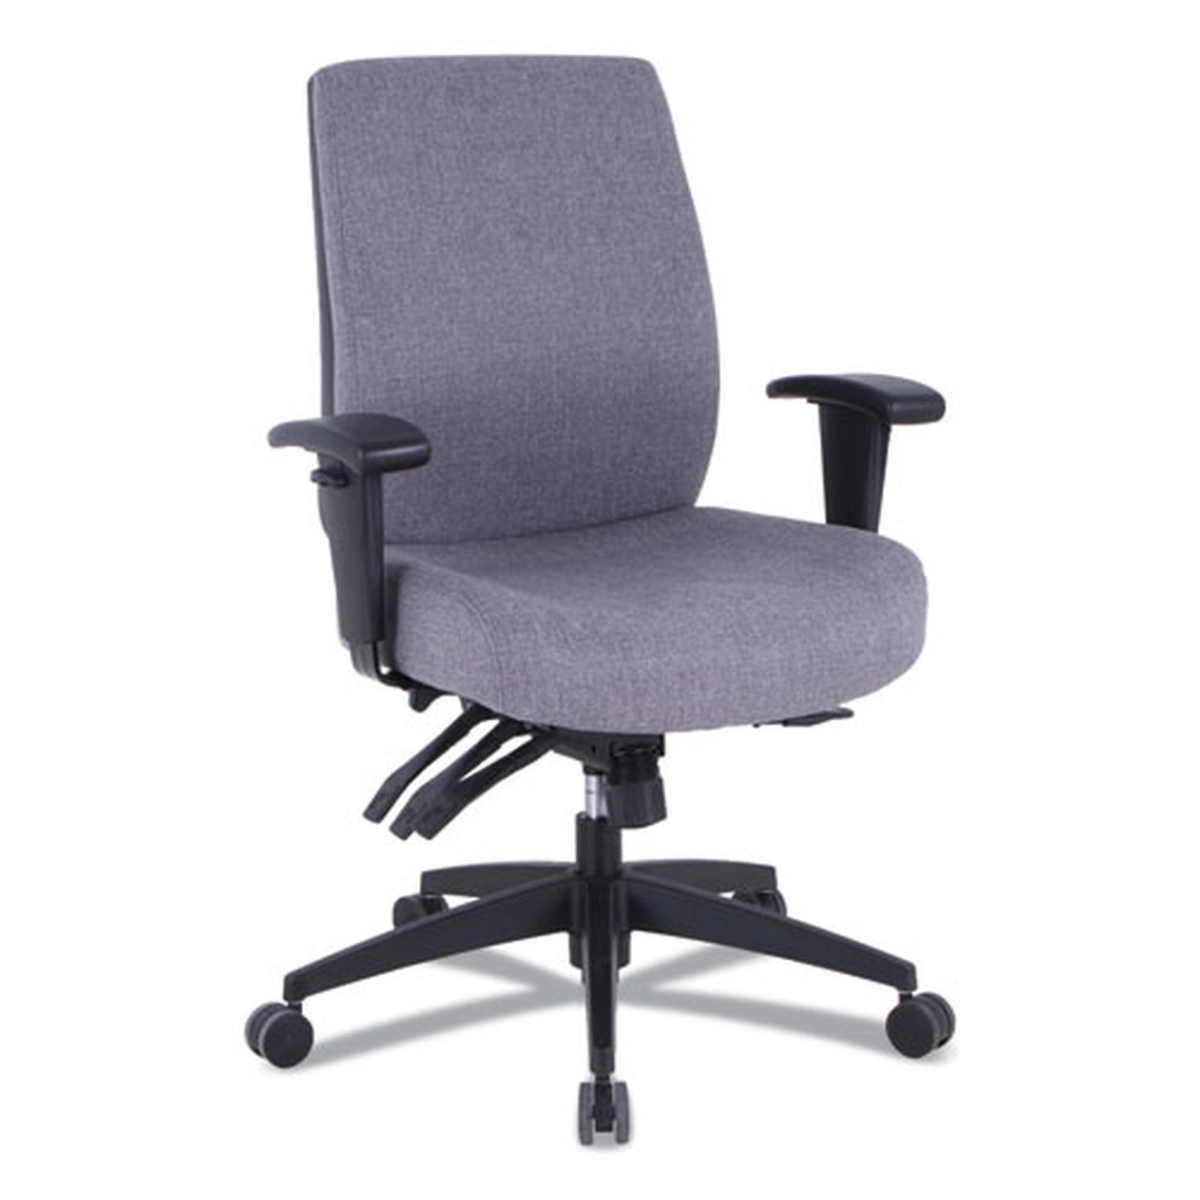 UPC 042167000011 product image for Alera HPT4241 24-7 MB Series Multifx Chair, Gray | upcitemdb.com